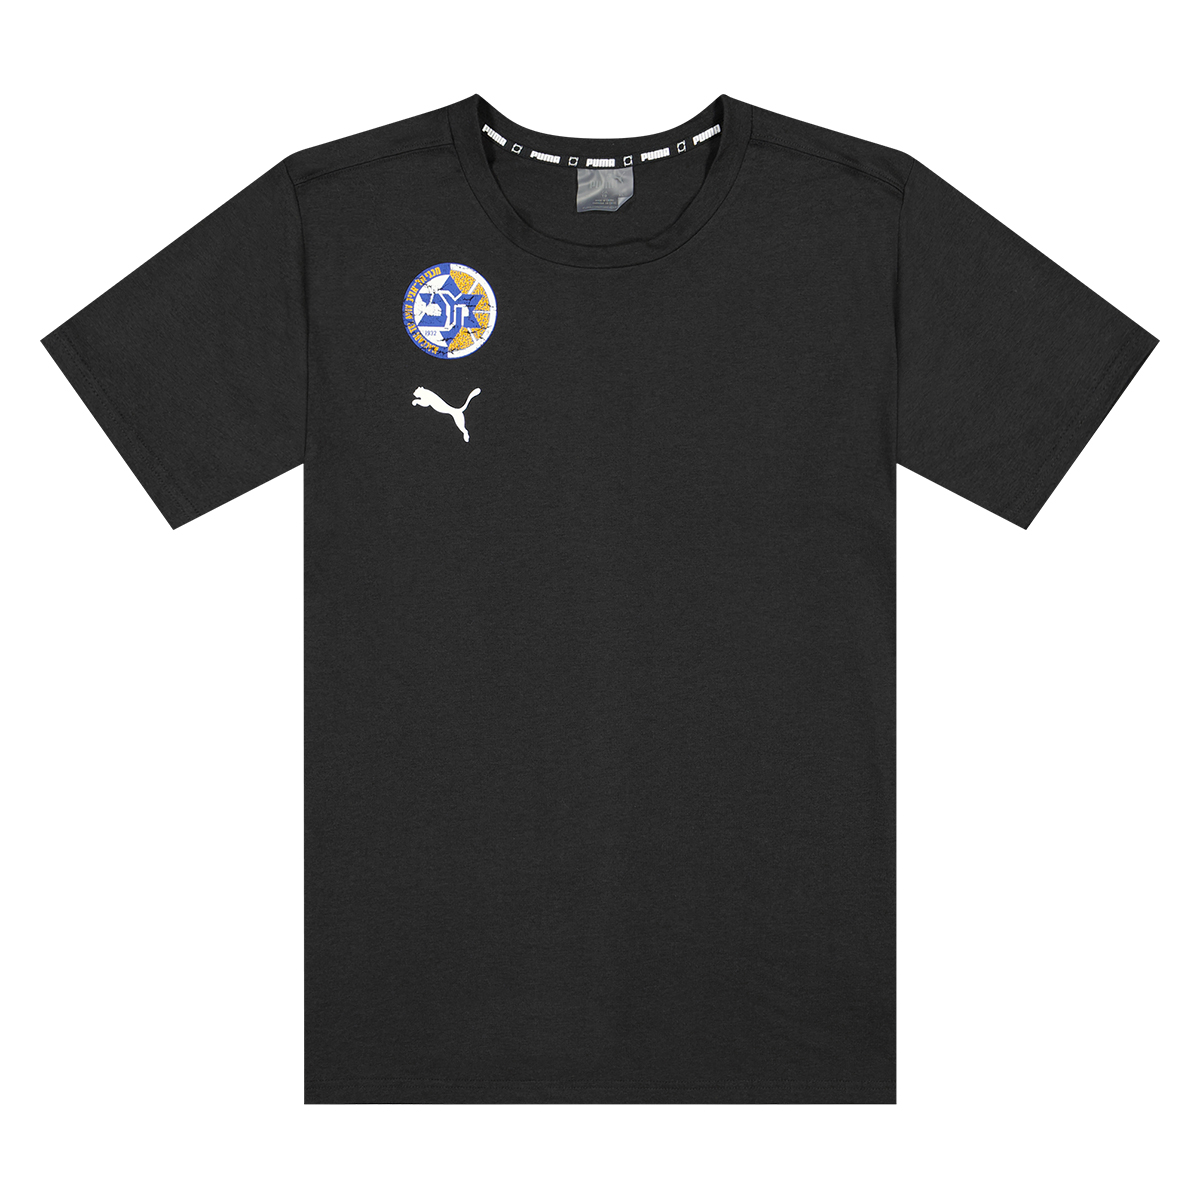 Image of Puma Maccabi Tel Aviv Basketball T-shirt, Puma Black